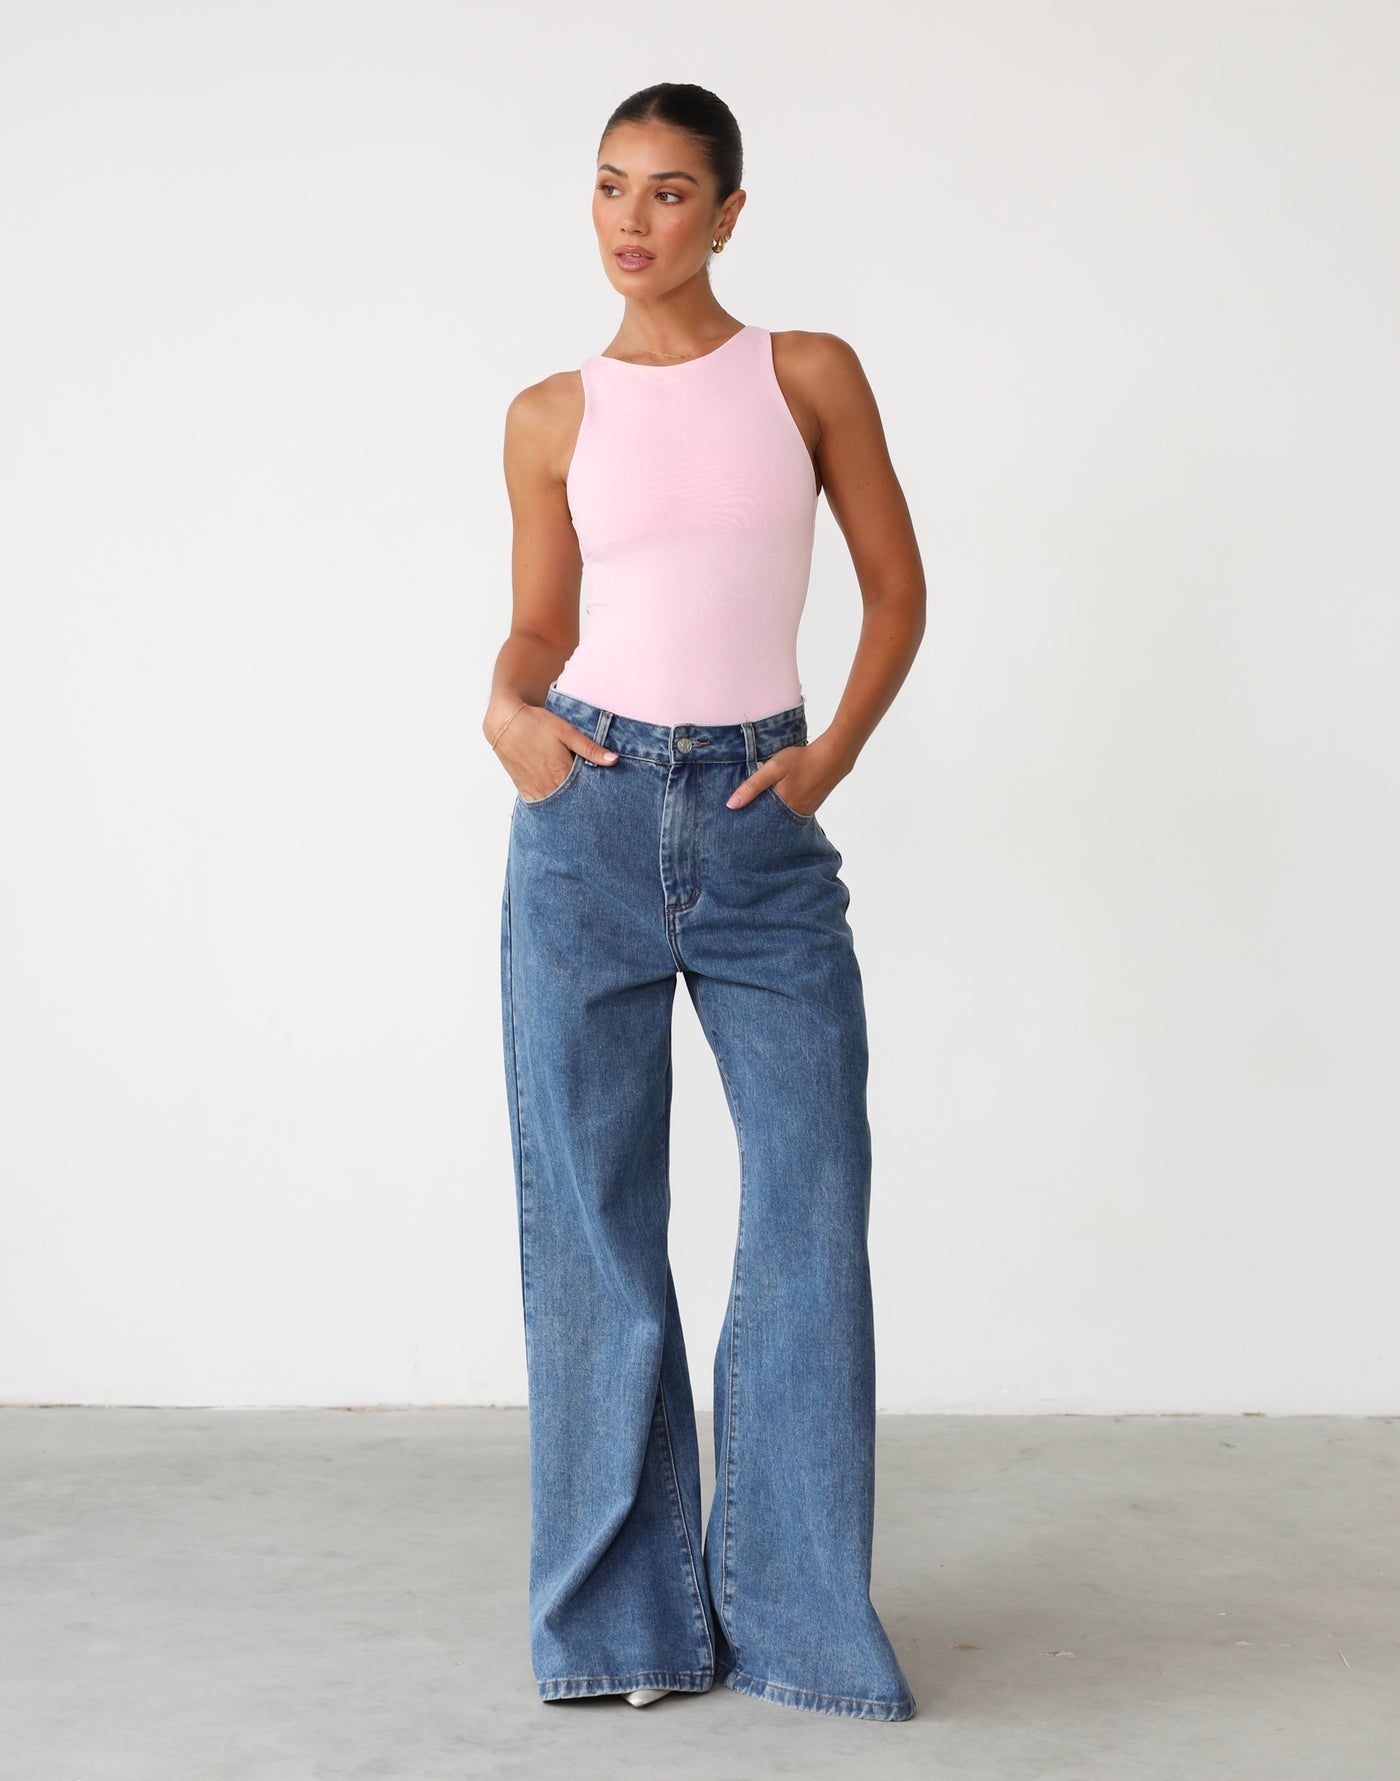 Vivid Bodysuit (Light Pink) | Round Neckline Bodysuit - Women's Top - Charcoal Clothing